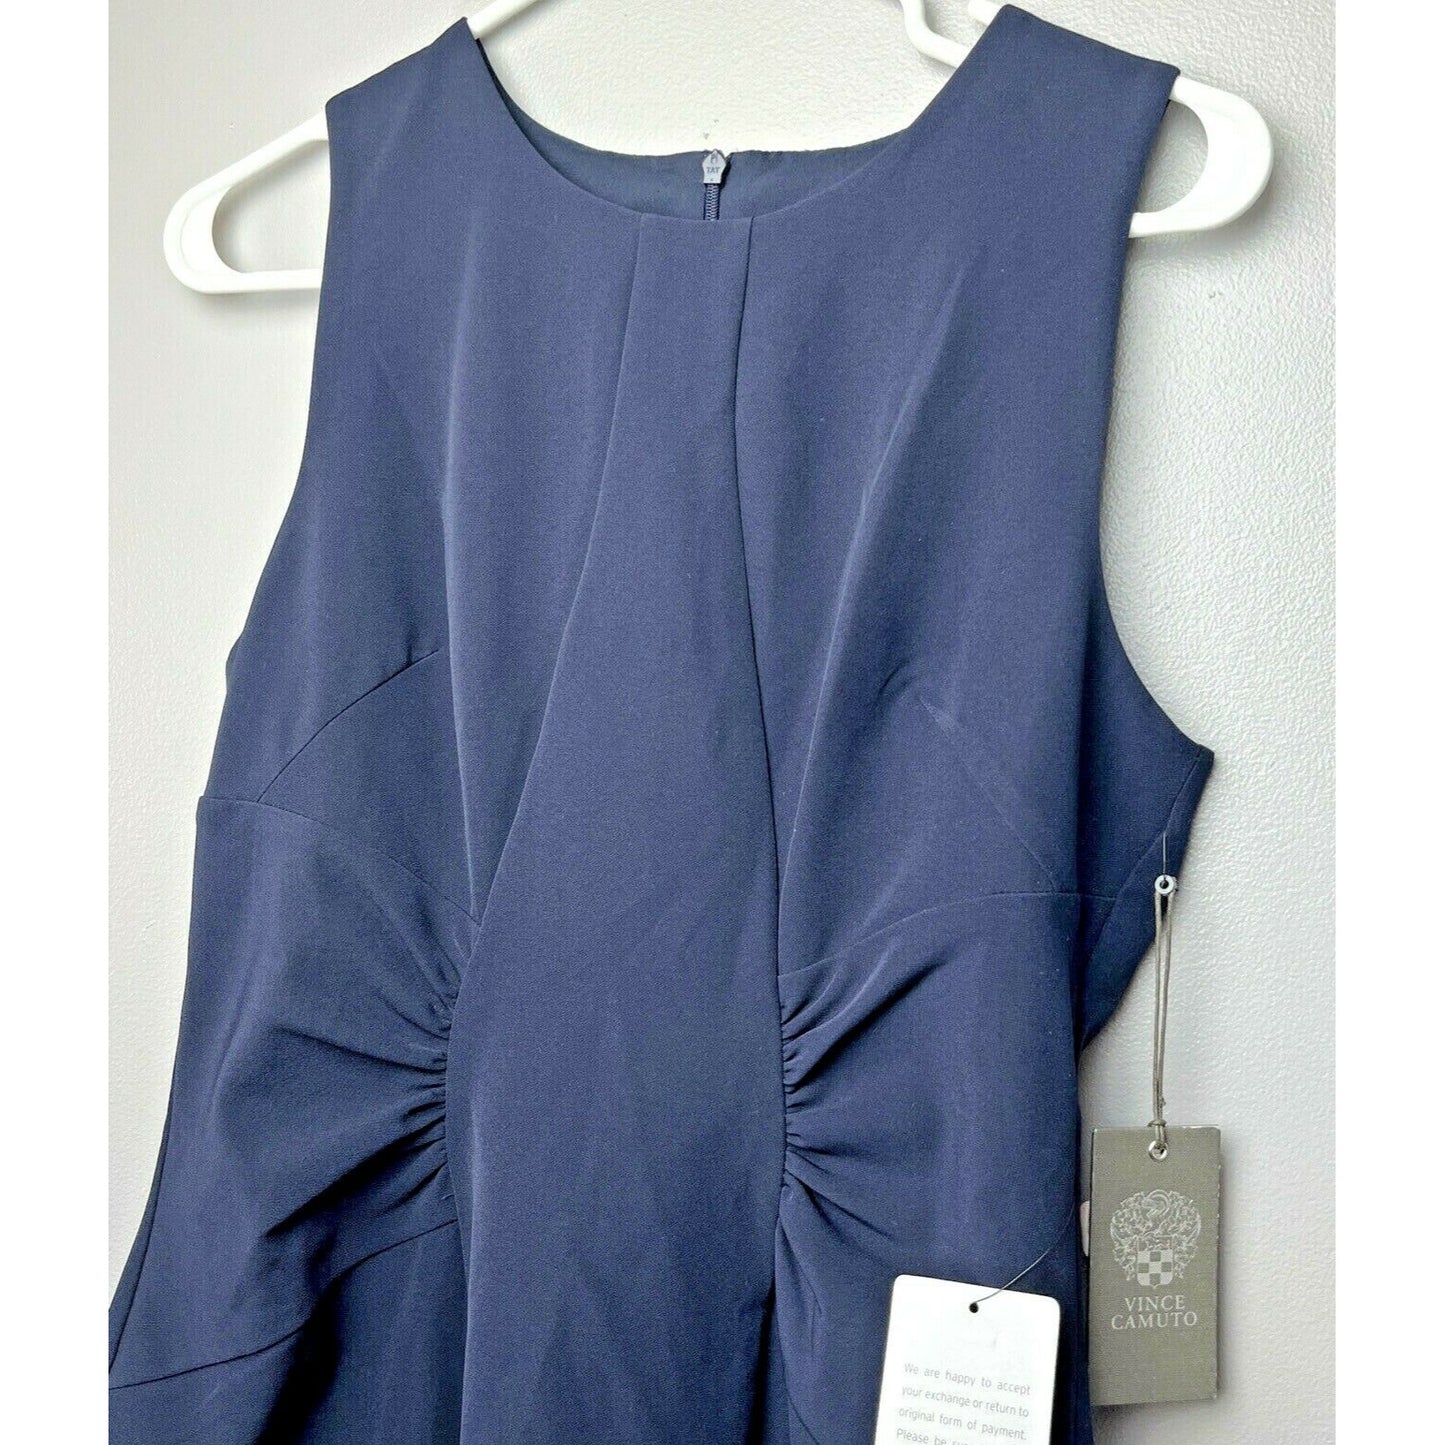 Vince Camuto Laguna Crepe Bodycon Dress, Women's Size 8, Blue - NEW